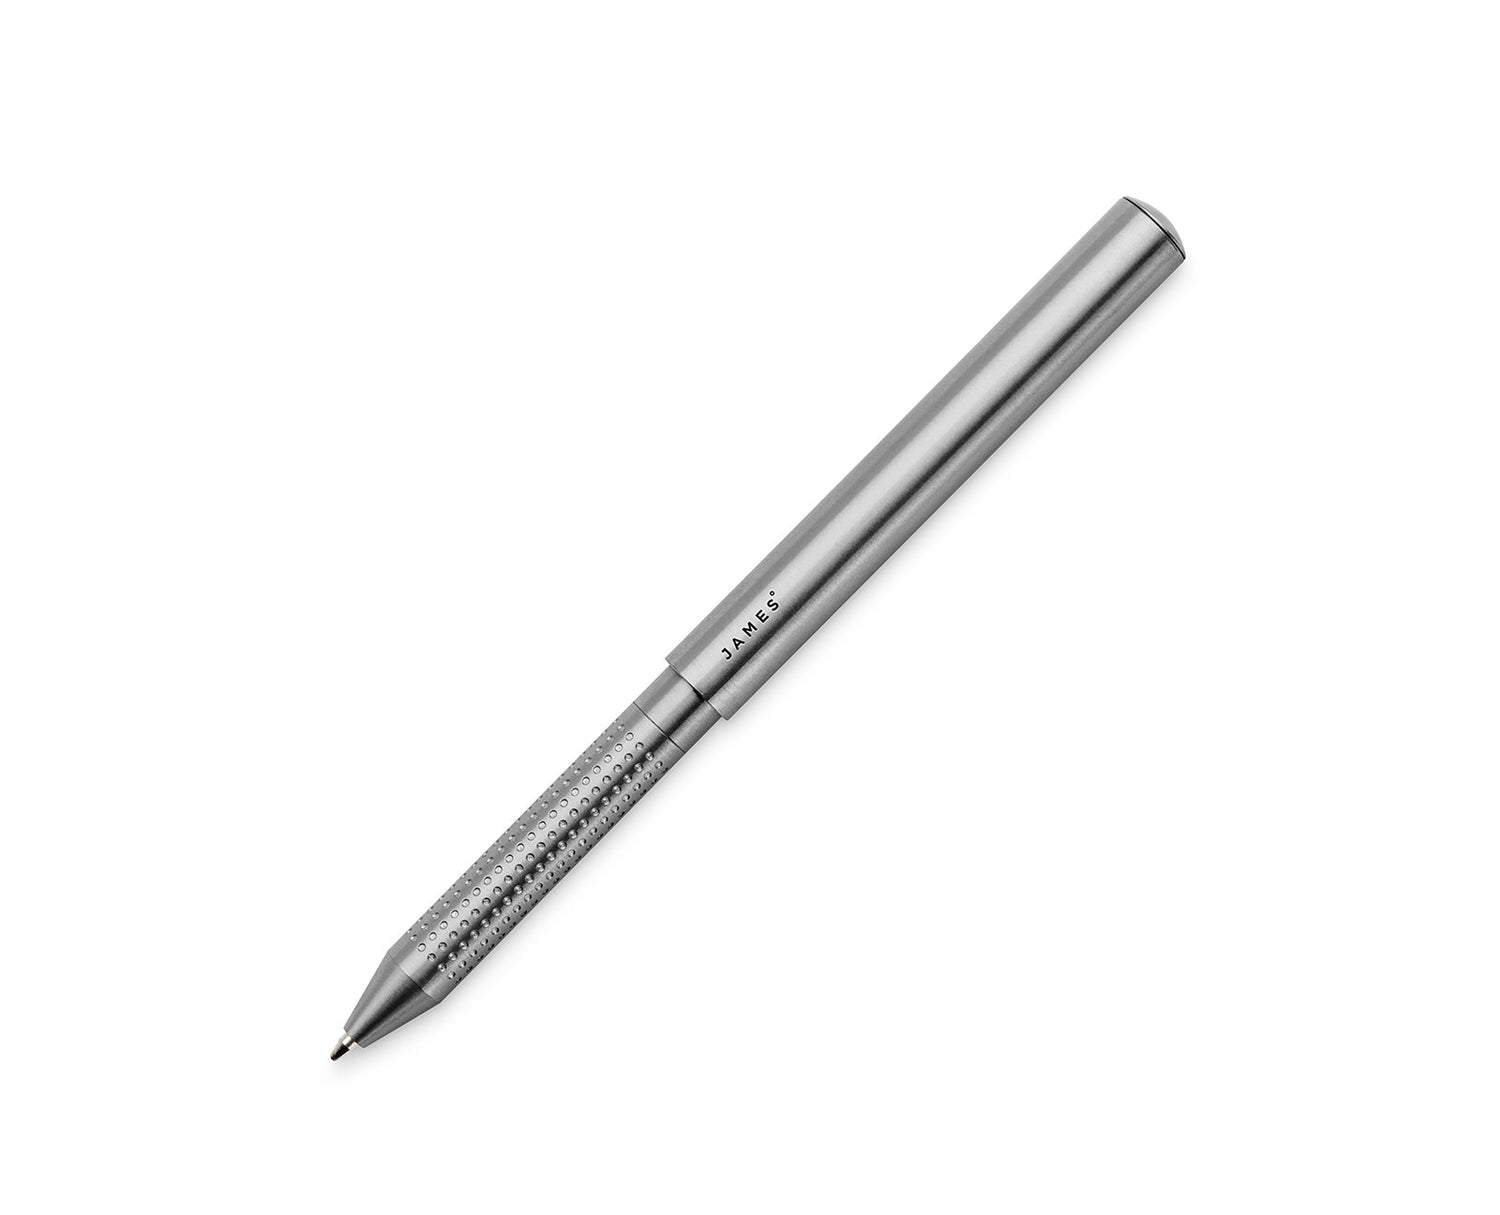 The titanium Stilwell pen.